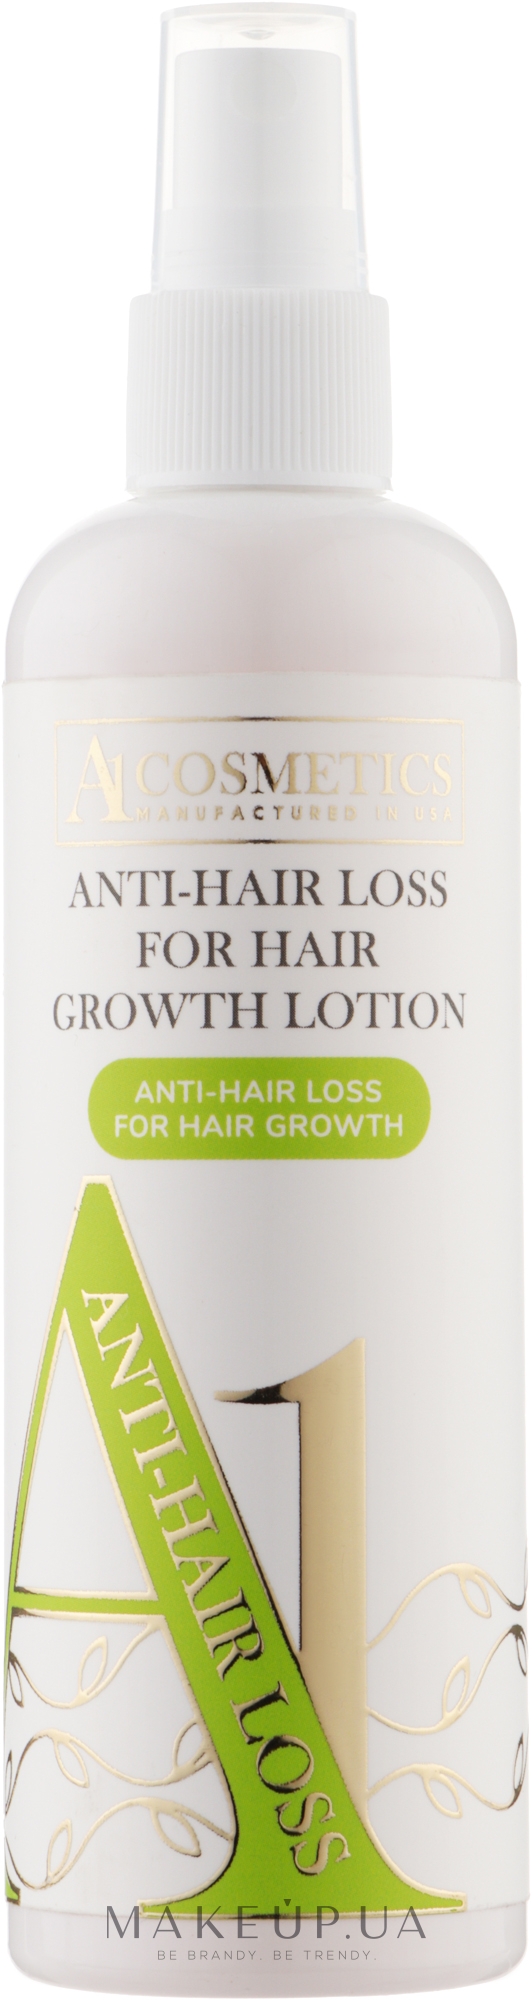 Лосьон против выпадения и для роста волос - A1 Cosmetics Anti-Hair Loss For Hair Growth Lotion — фото 150ml